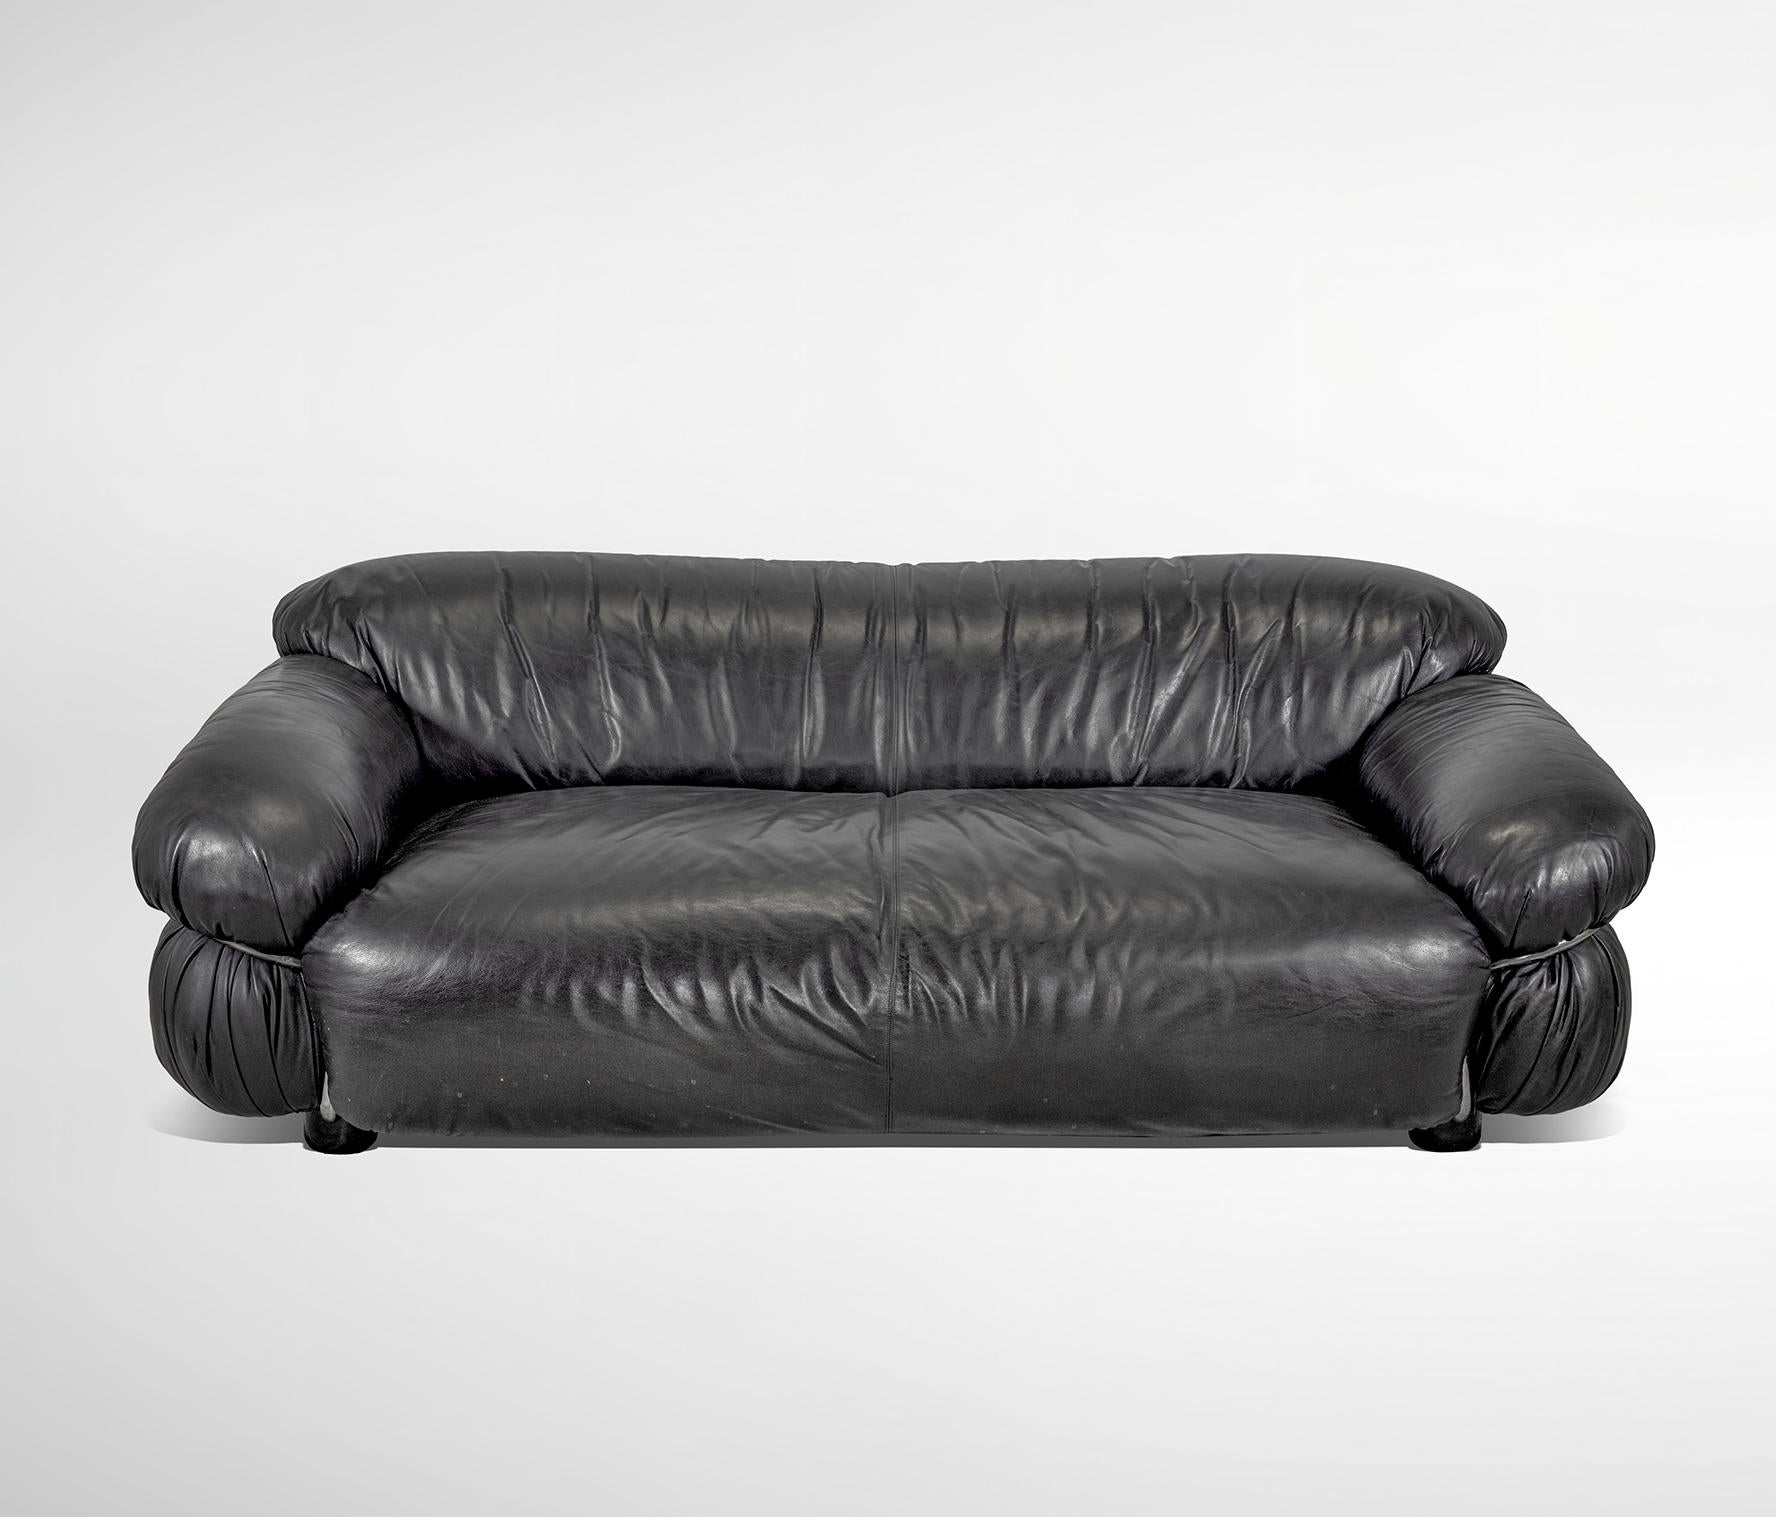 Two seater sofa designed by Gianfranco Frattini for Cassina, 1969.
Original label.
Black Leather, excellent condition.
Ref. Giuliana Gramigna, 